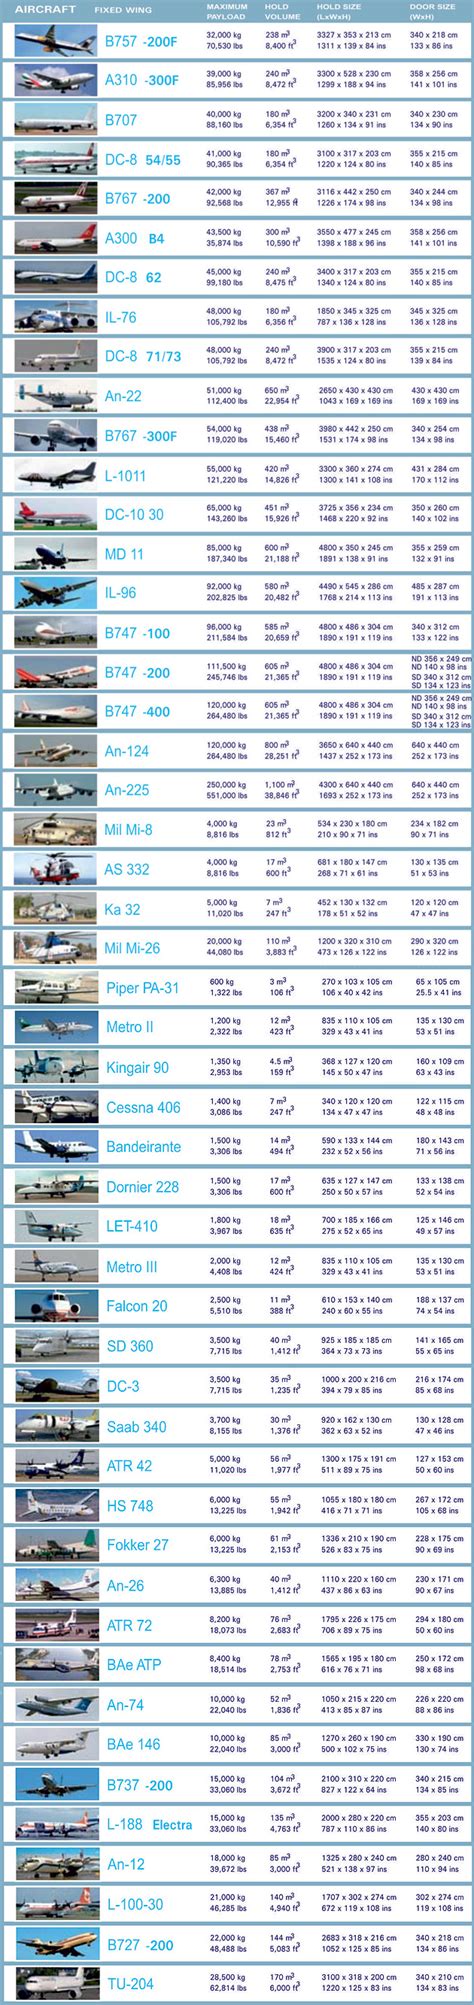 aircraft types